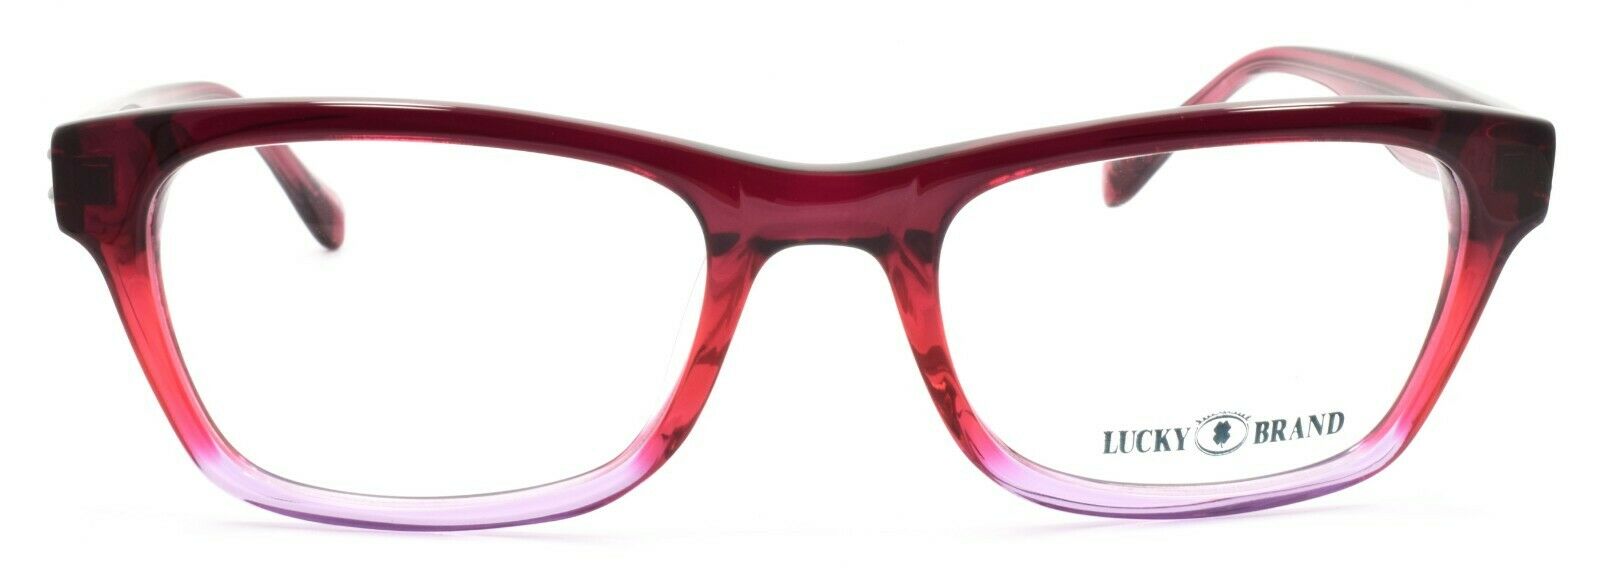 2-LUCKY BRAND Tropic UF Women's Eyeglasses Frames 52-20-140 Raspberry + CASE-751286248227-IKSpecs